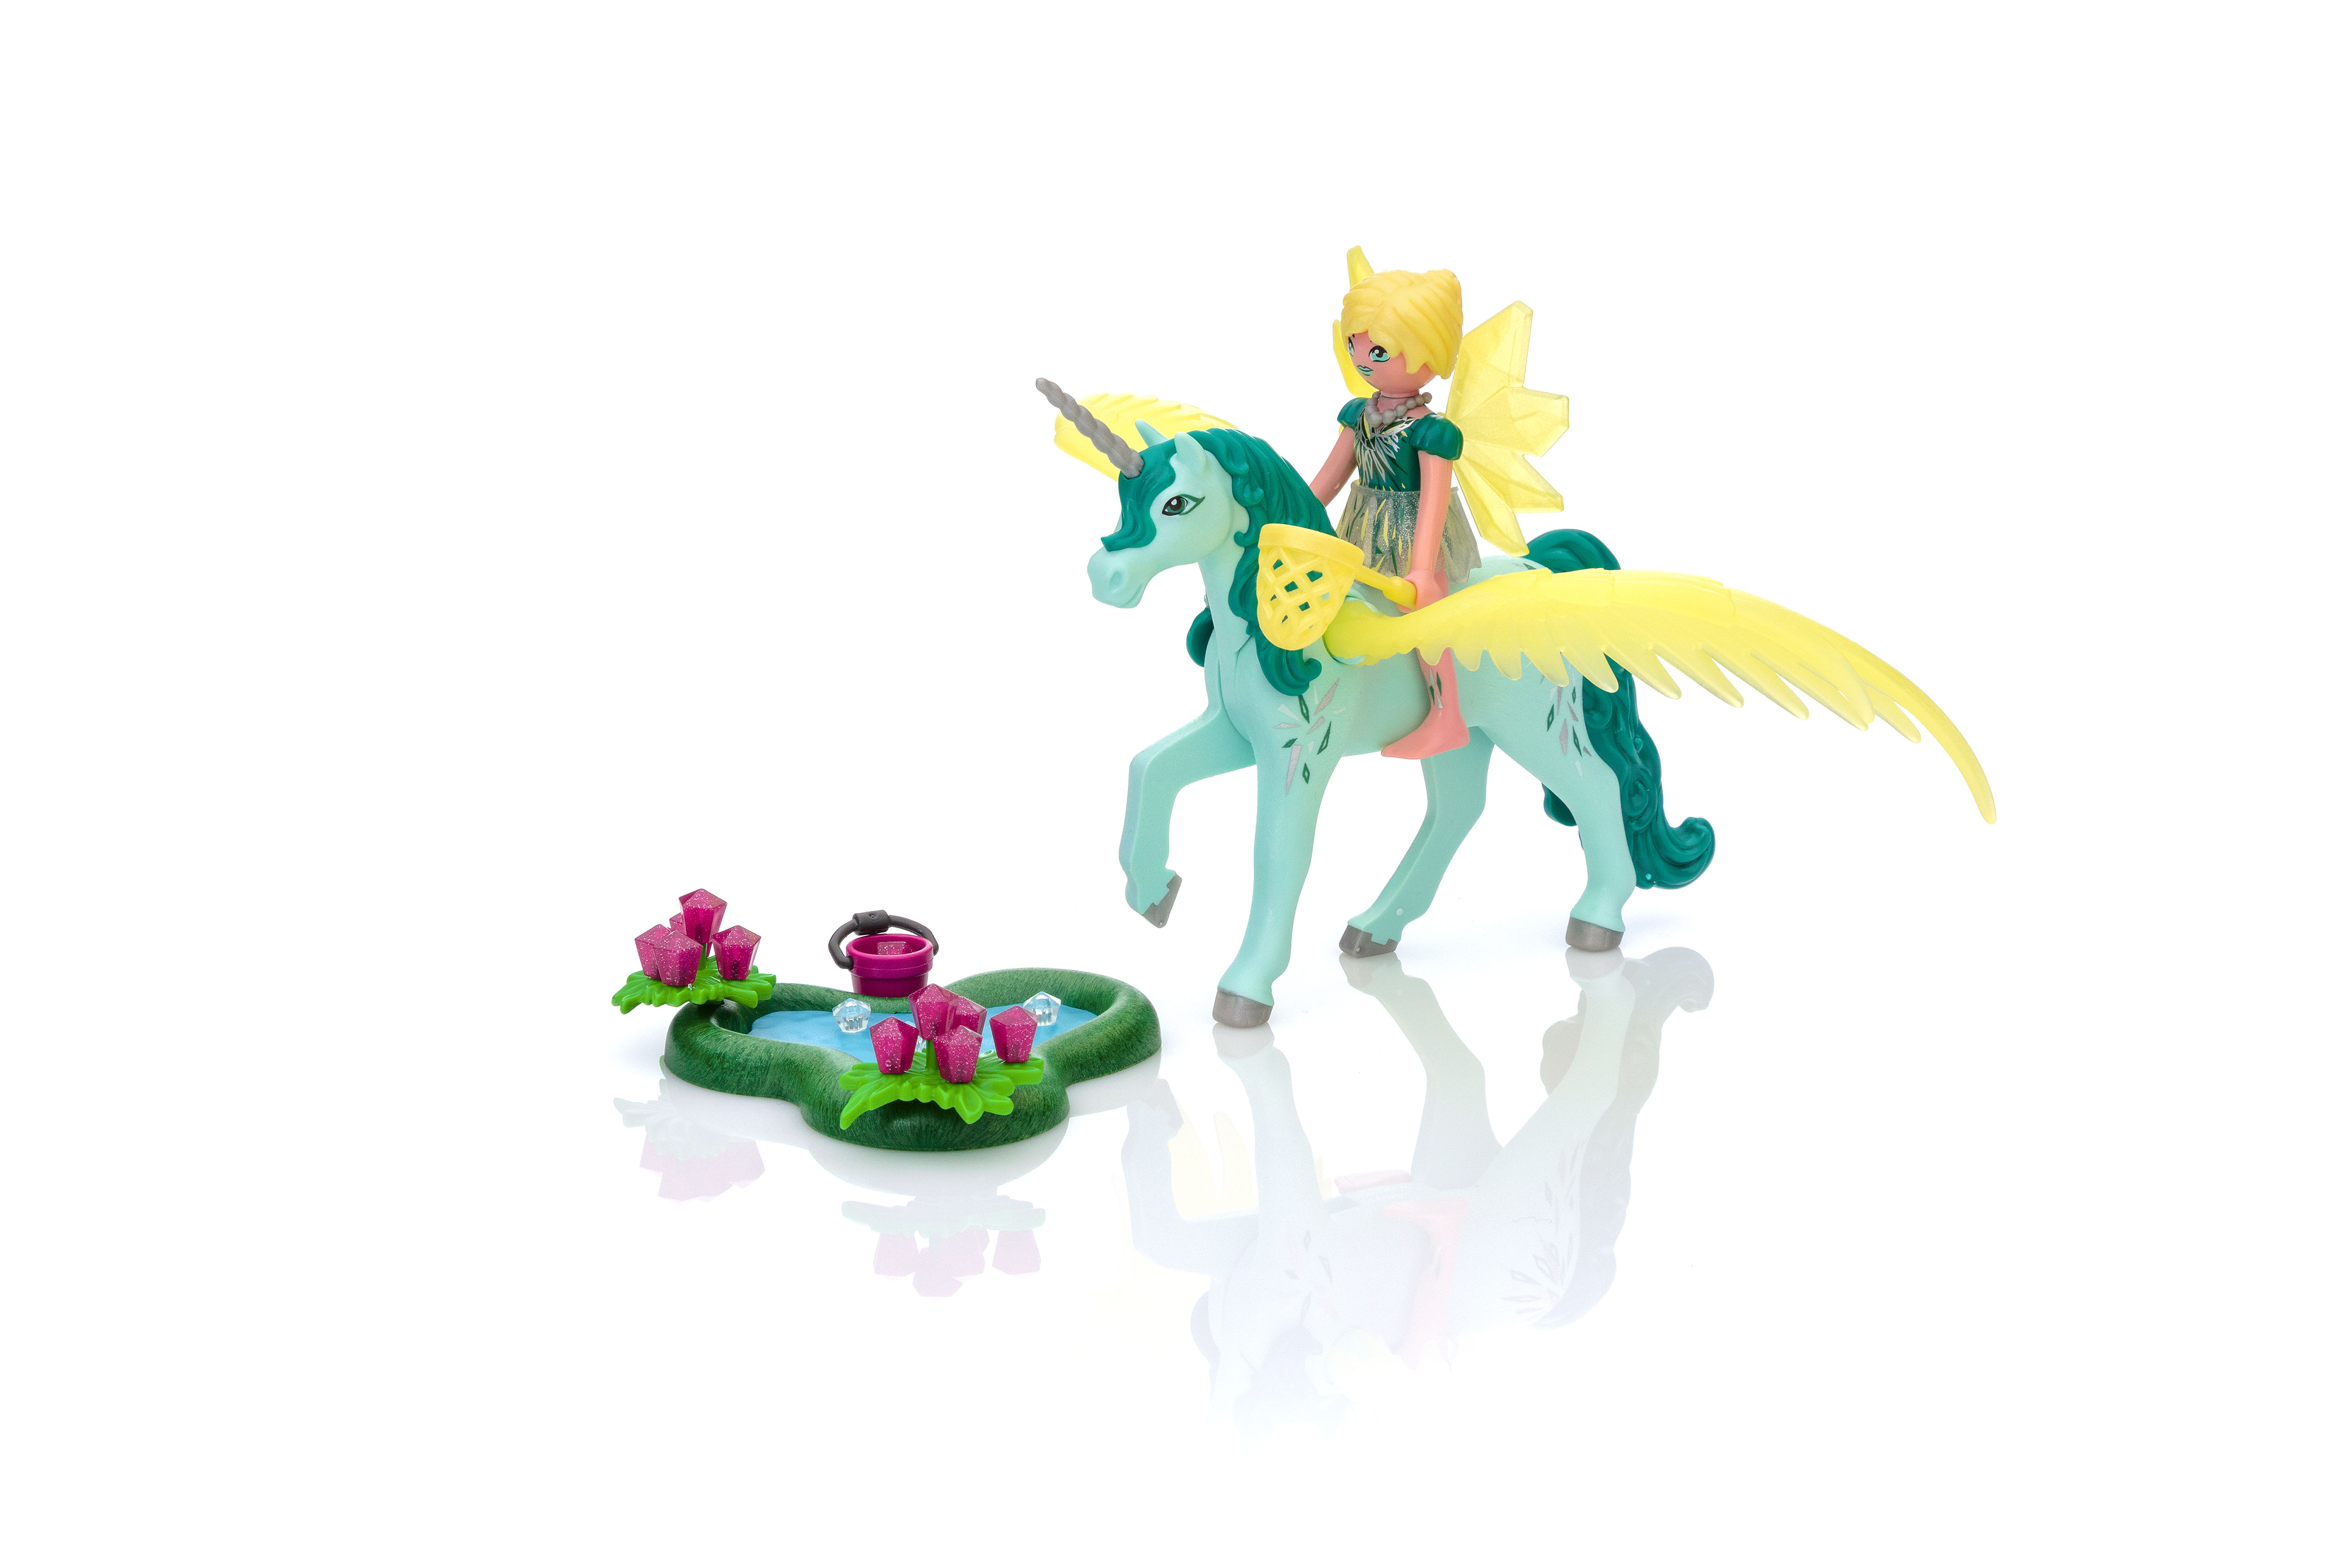 Oeufs de Playmobil Licorne princesse luna avec chiot PlayMobil Fair